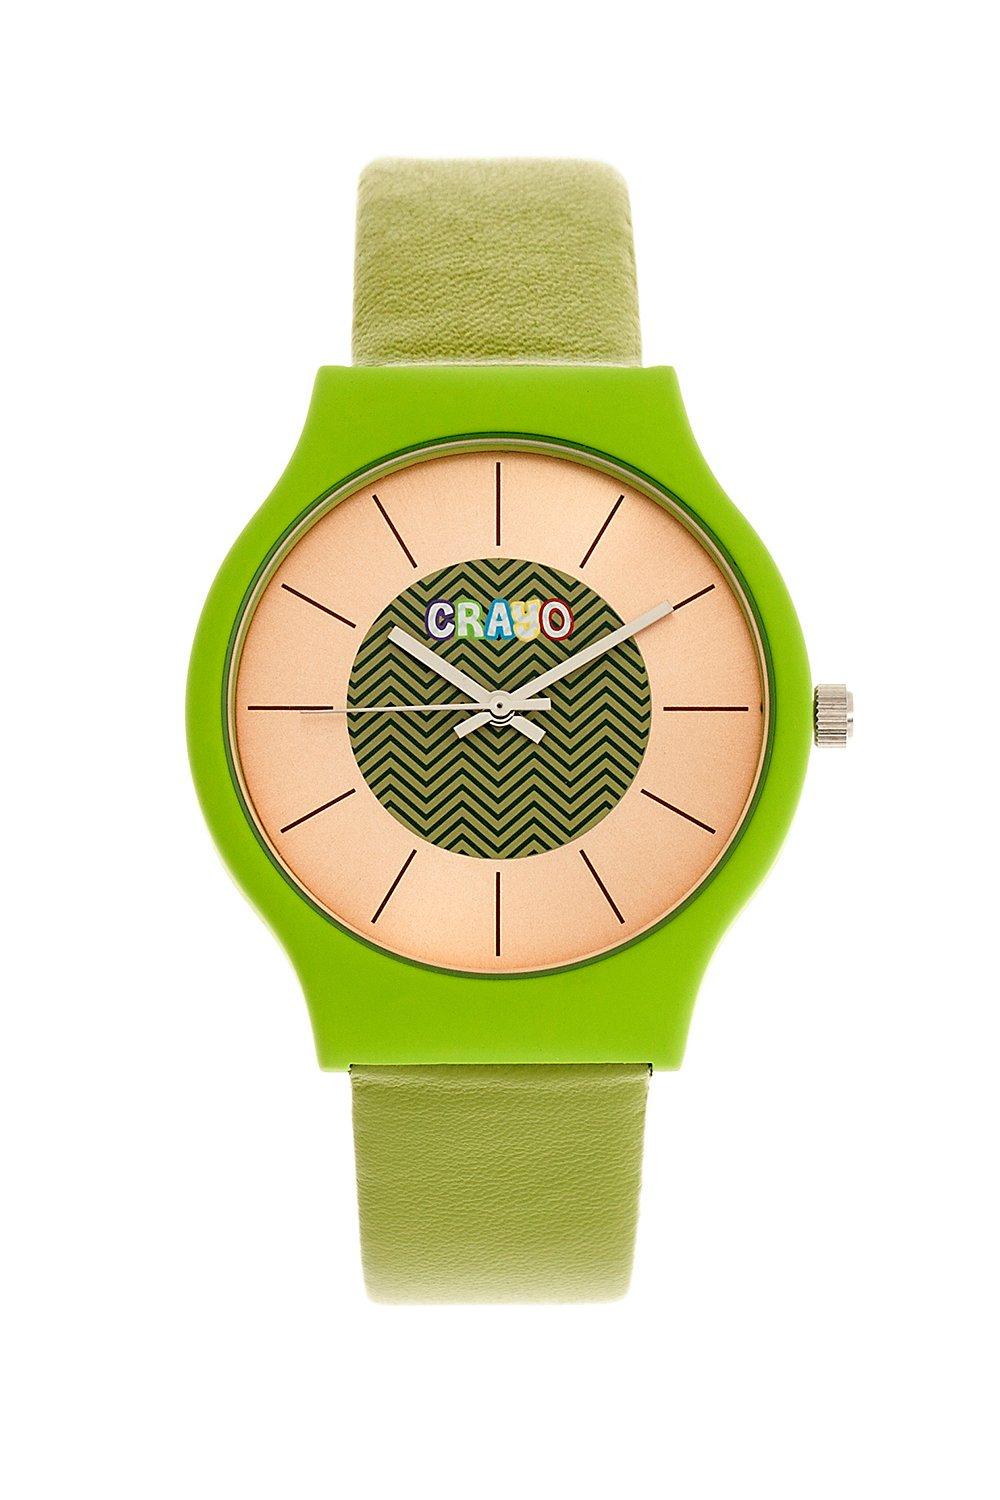 Часы унисекс Trinity Crayo, зеленый